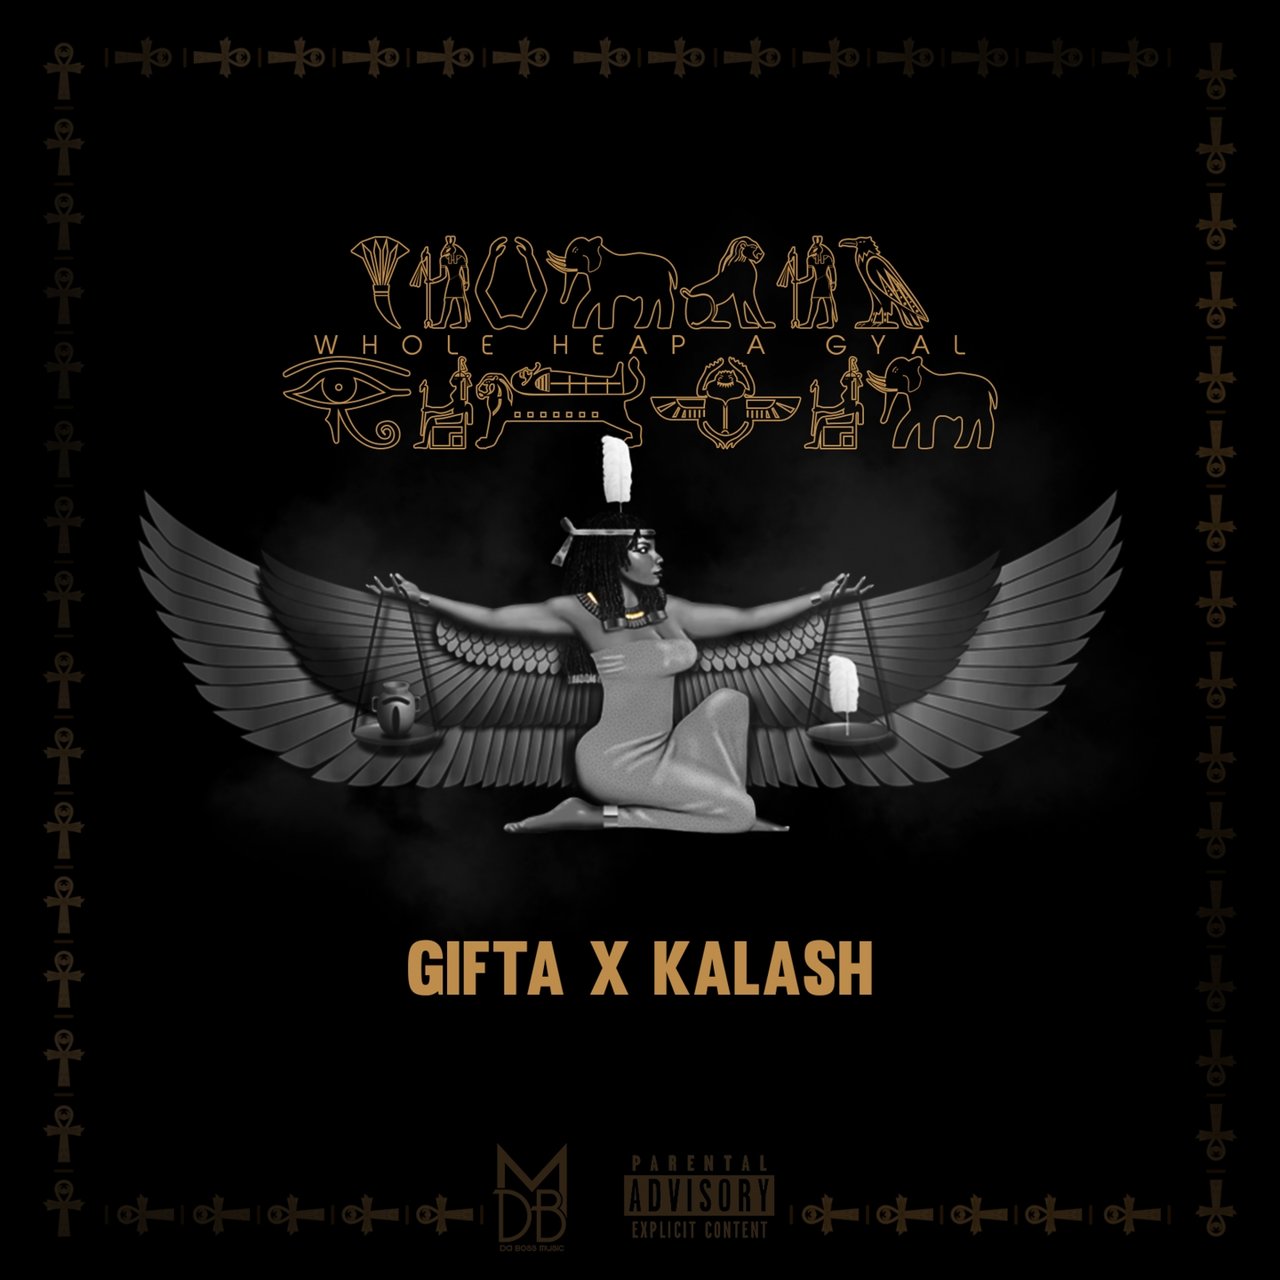 Gifta - Whole Heap A Gyal (ft. Kalash) (Cover)